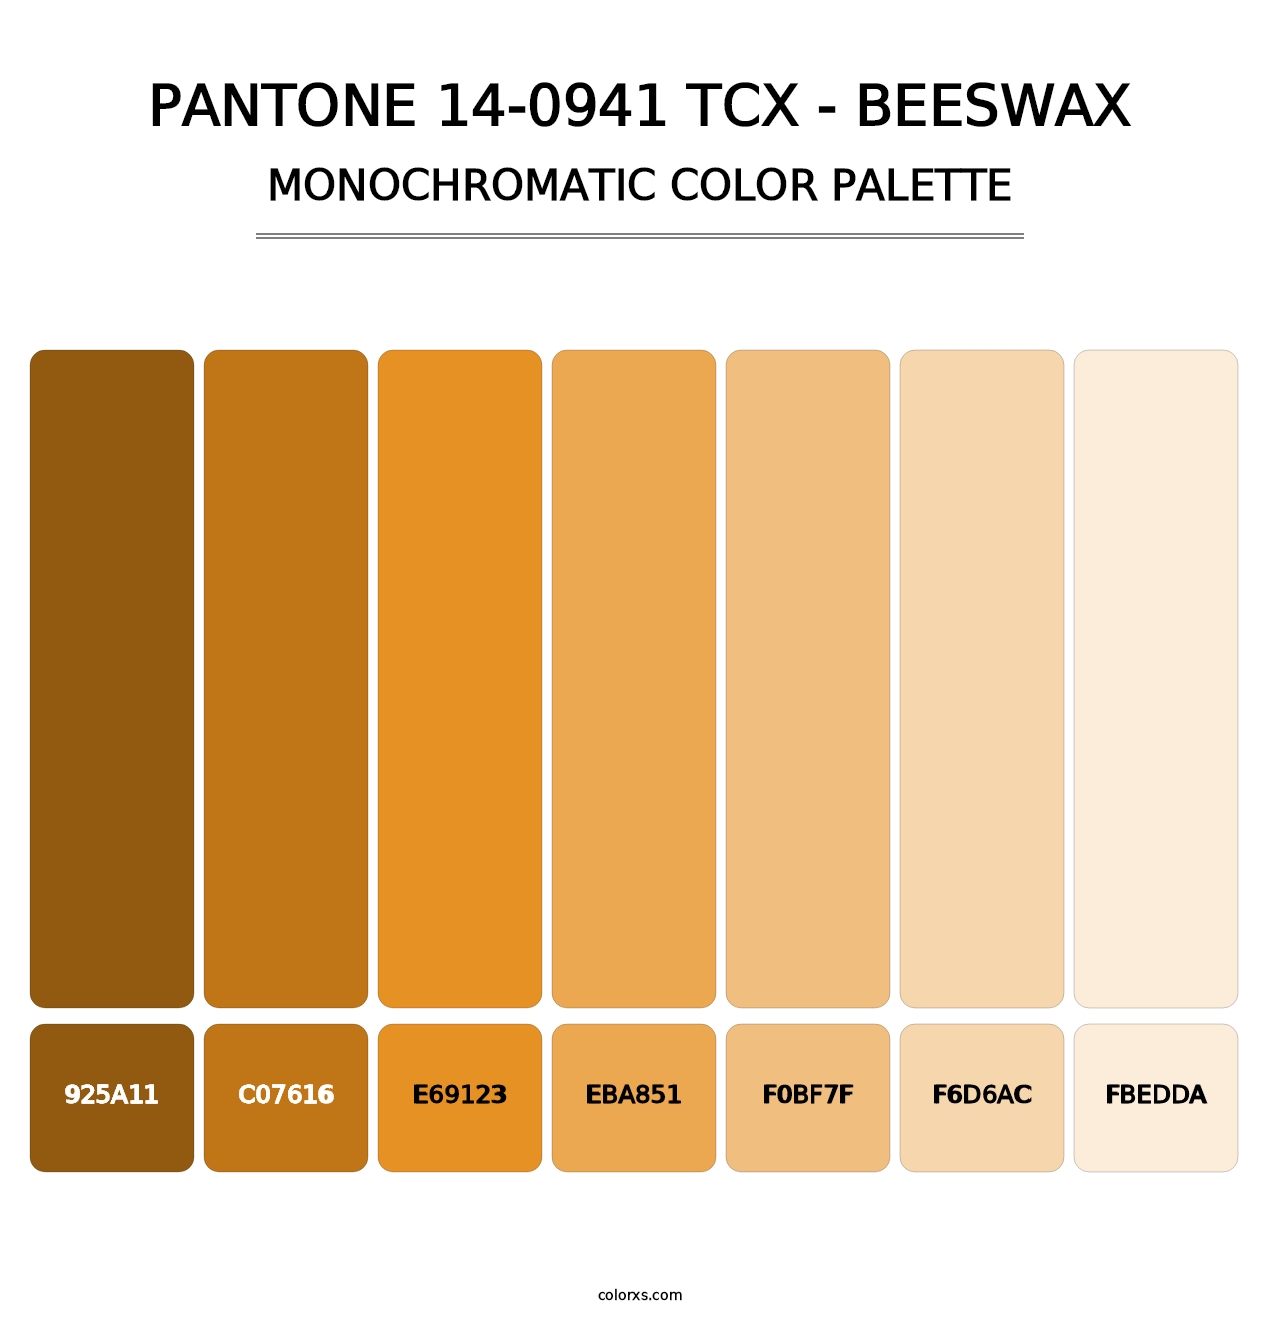 PANTONE 14-0941 TCX - Beeswax - Monochromatic Color Palette